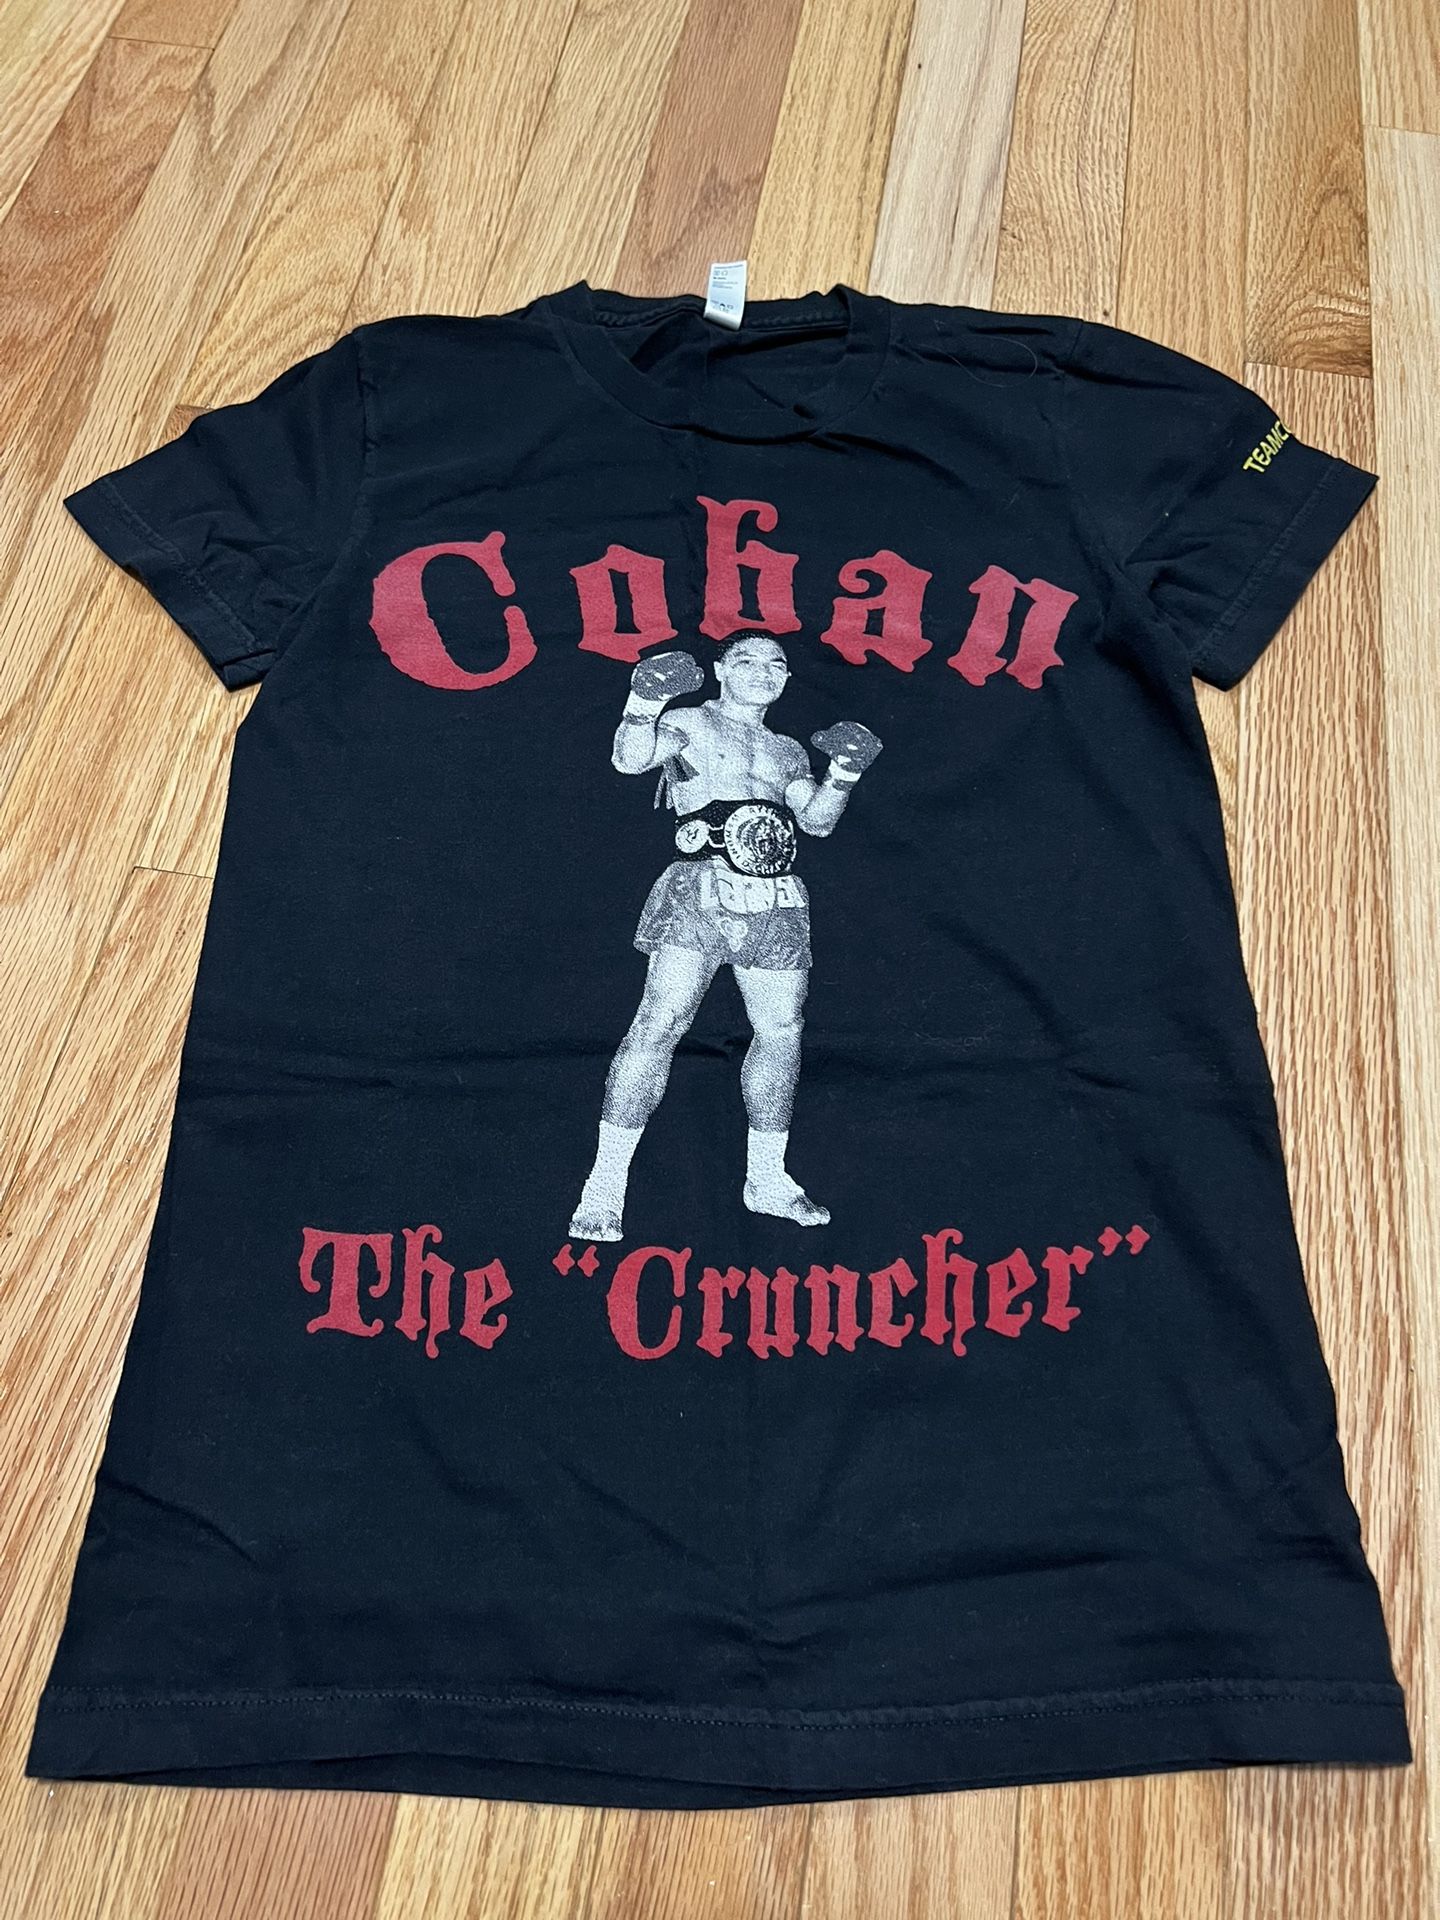 Muay Thai T-Shirts (Coban The Cruncher)